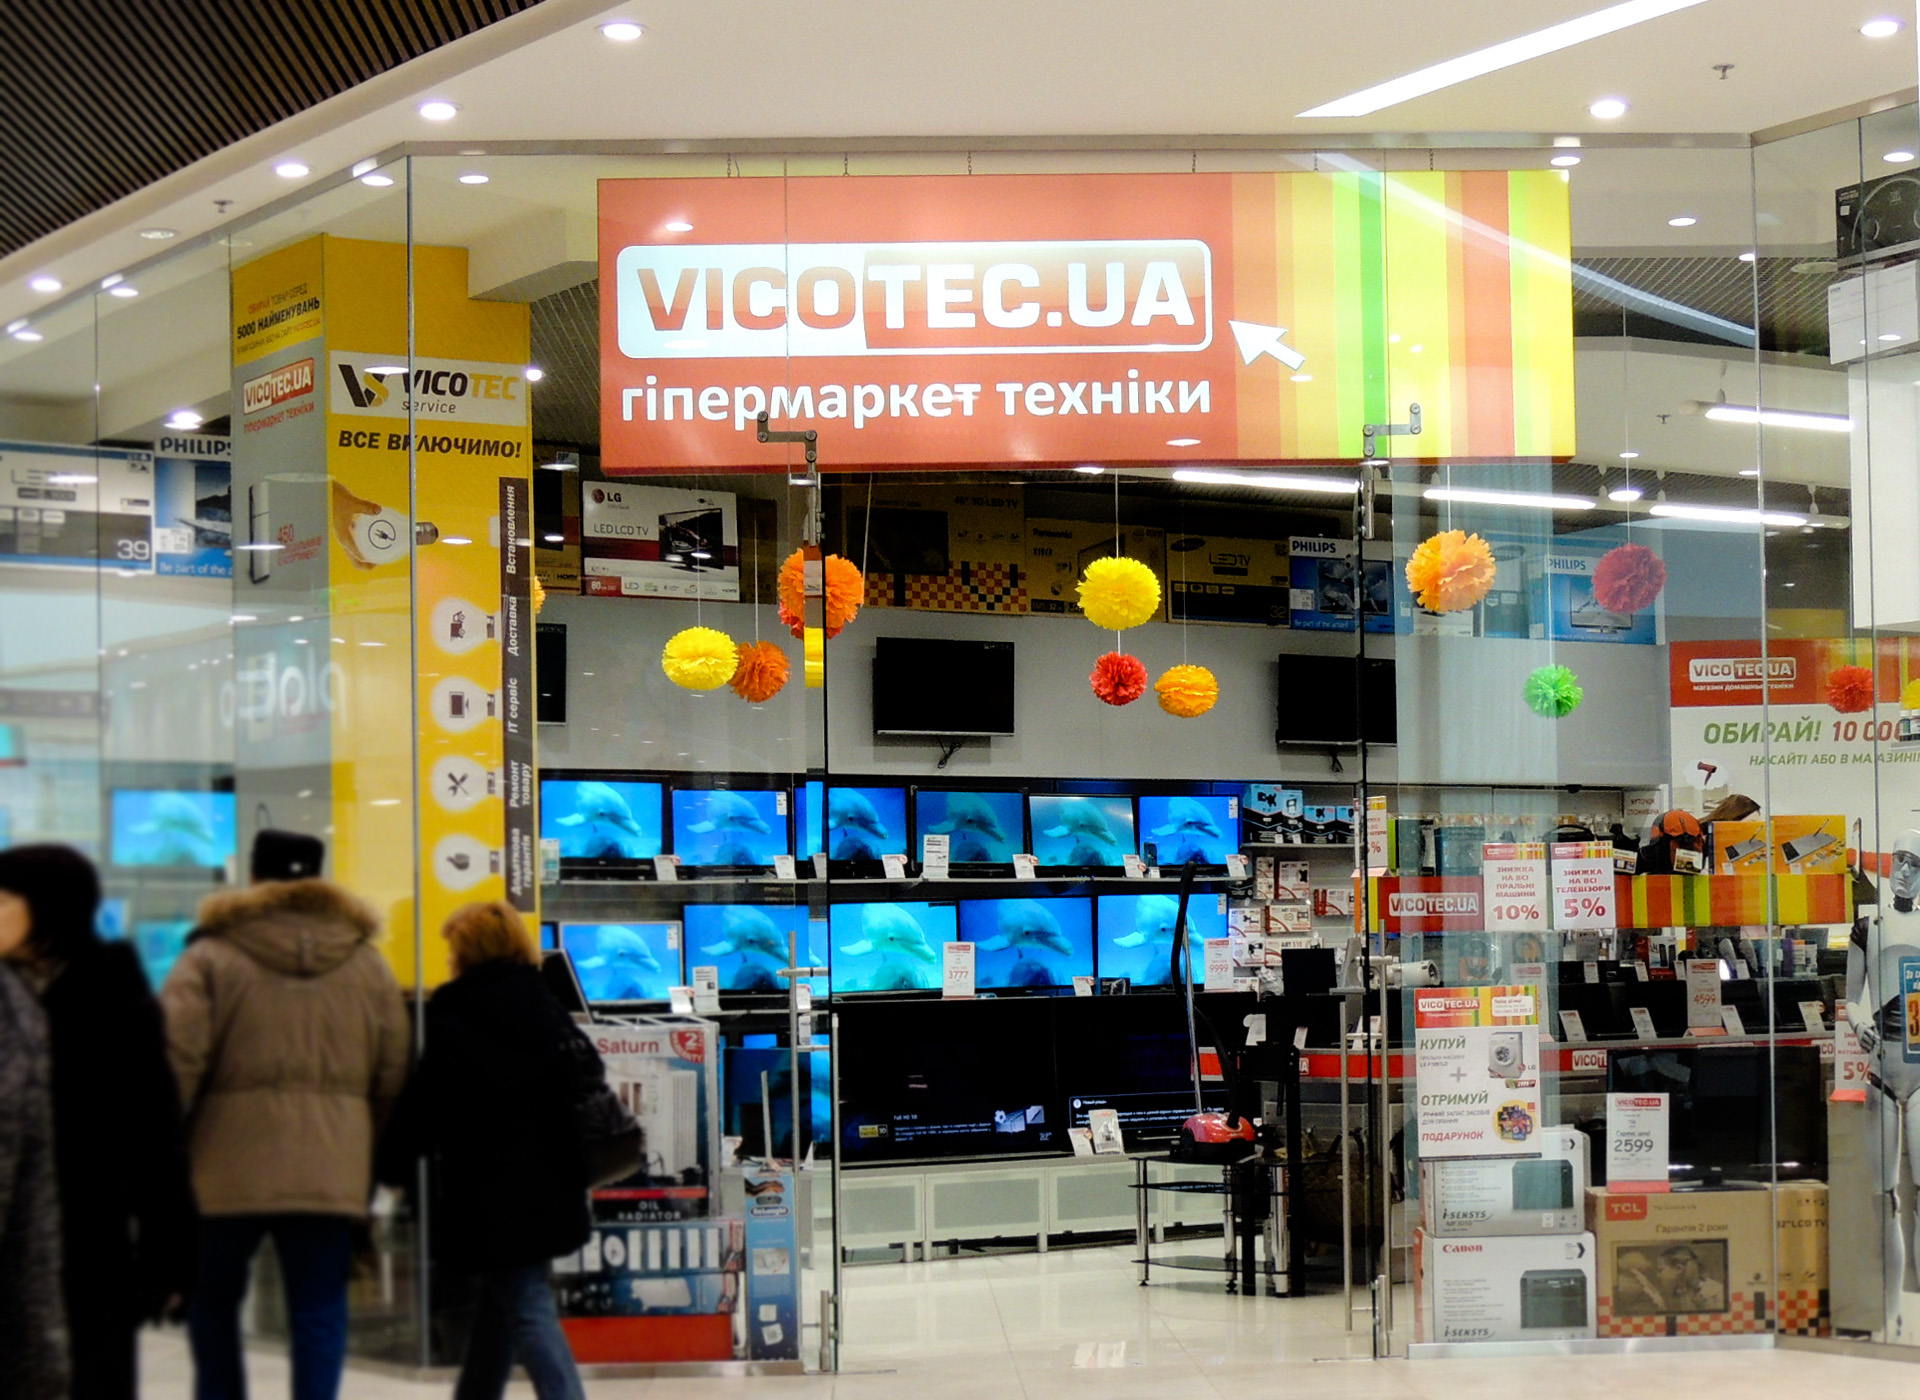 Vicotec гипермаркет техники сorporate identity design